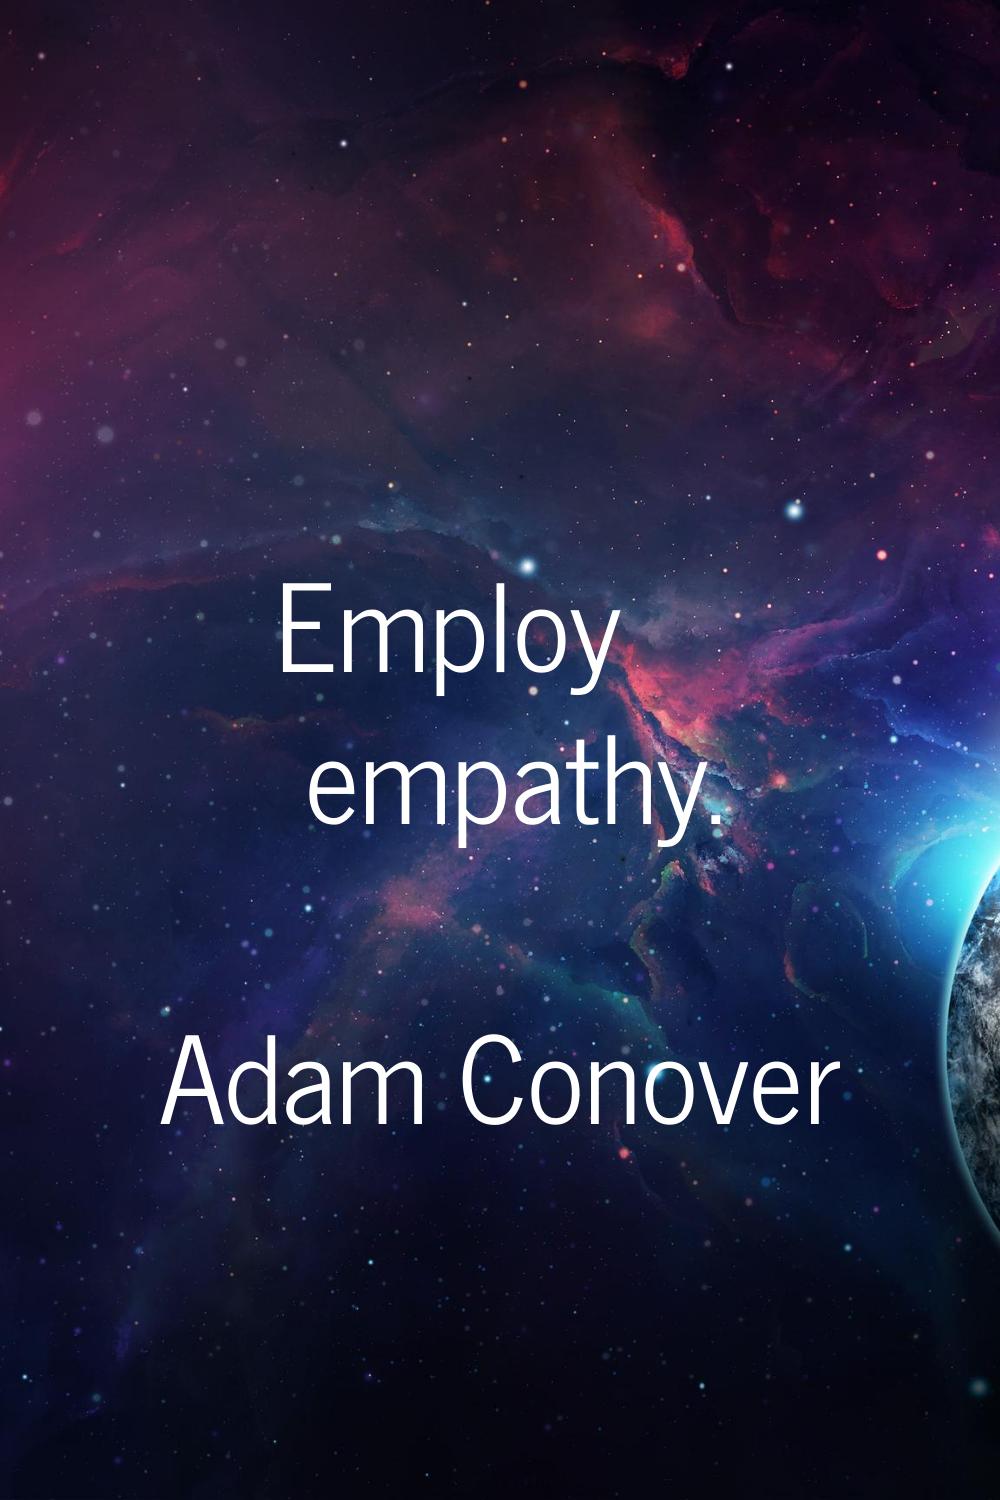 Employ empathy.